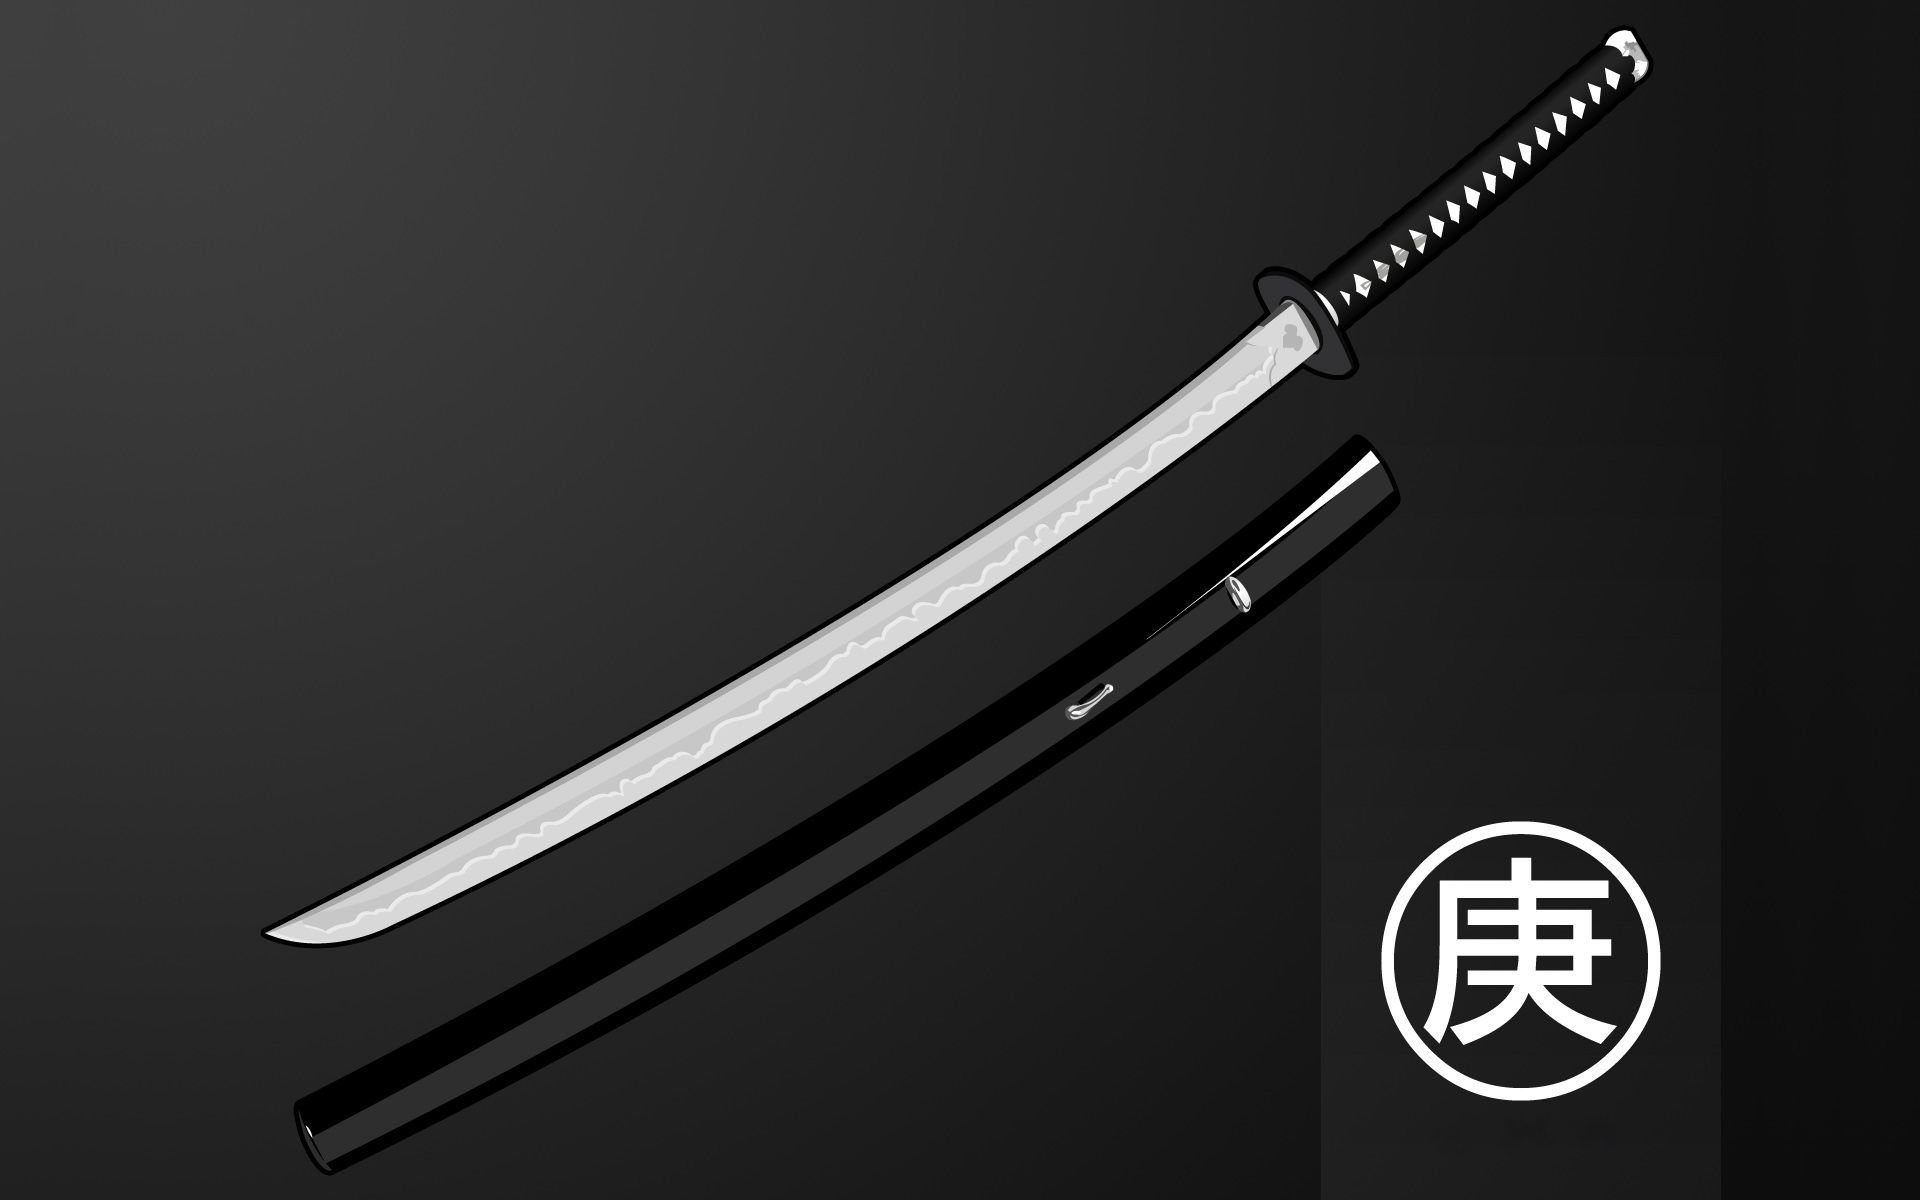 Japanese Sword Wallpaper HD Free Download For Desktop